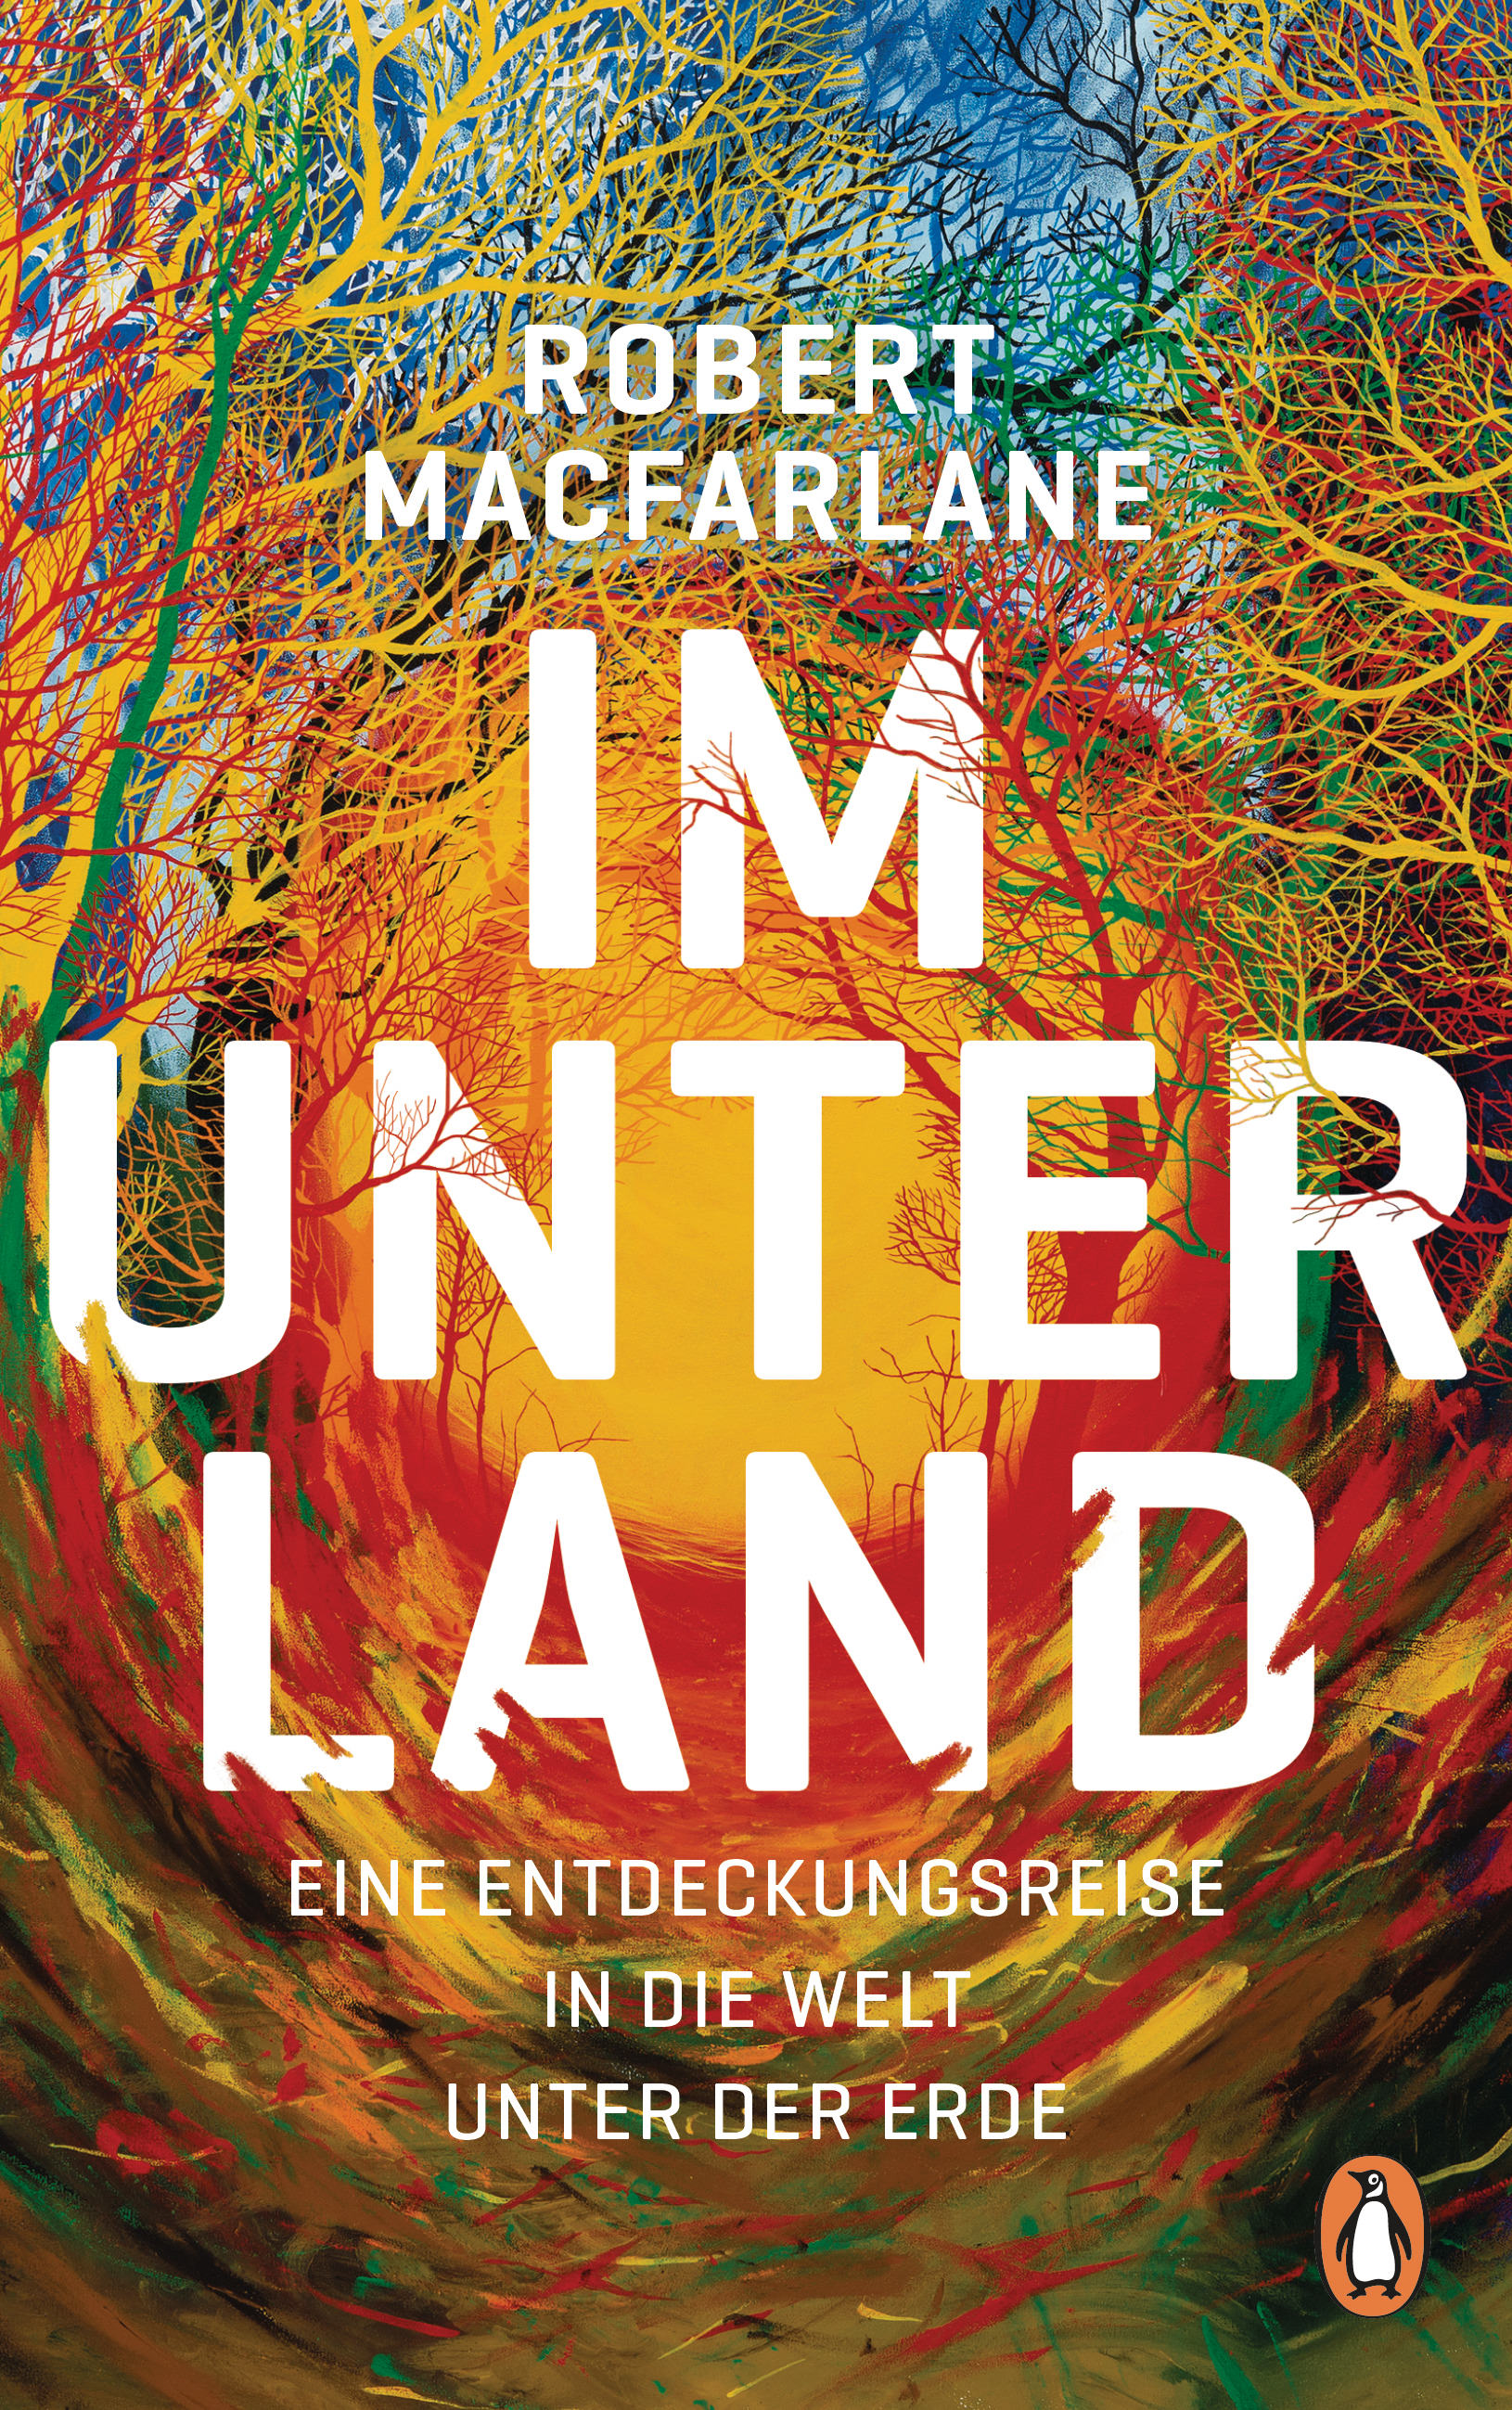 Buchcover: Robert Macfarlane: Im Unterland